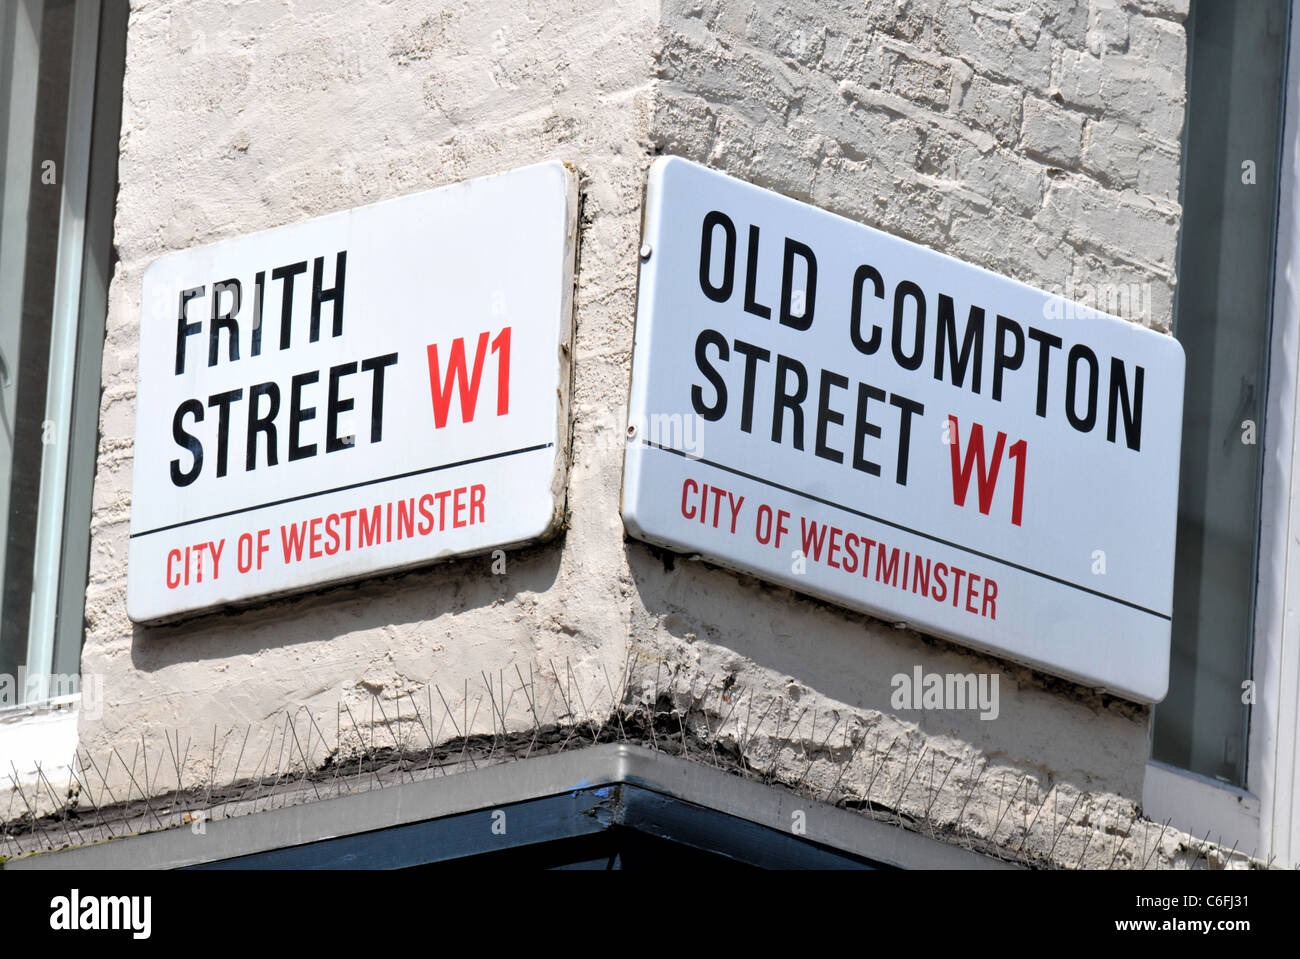 Frith Street et Old Compton Street, Soho, signes, la Grande-Bretagne Londres, Royaume-Uni Banque D'Images